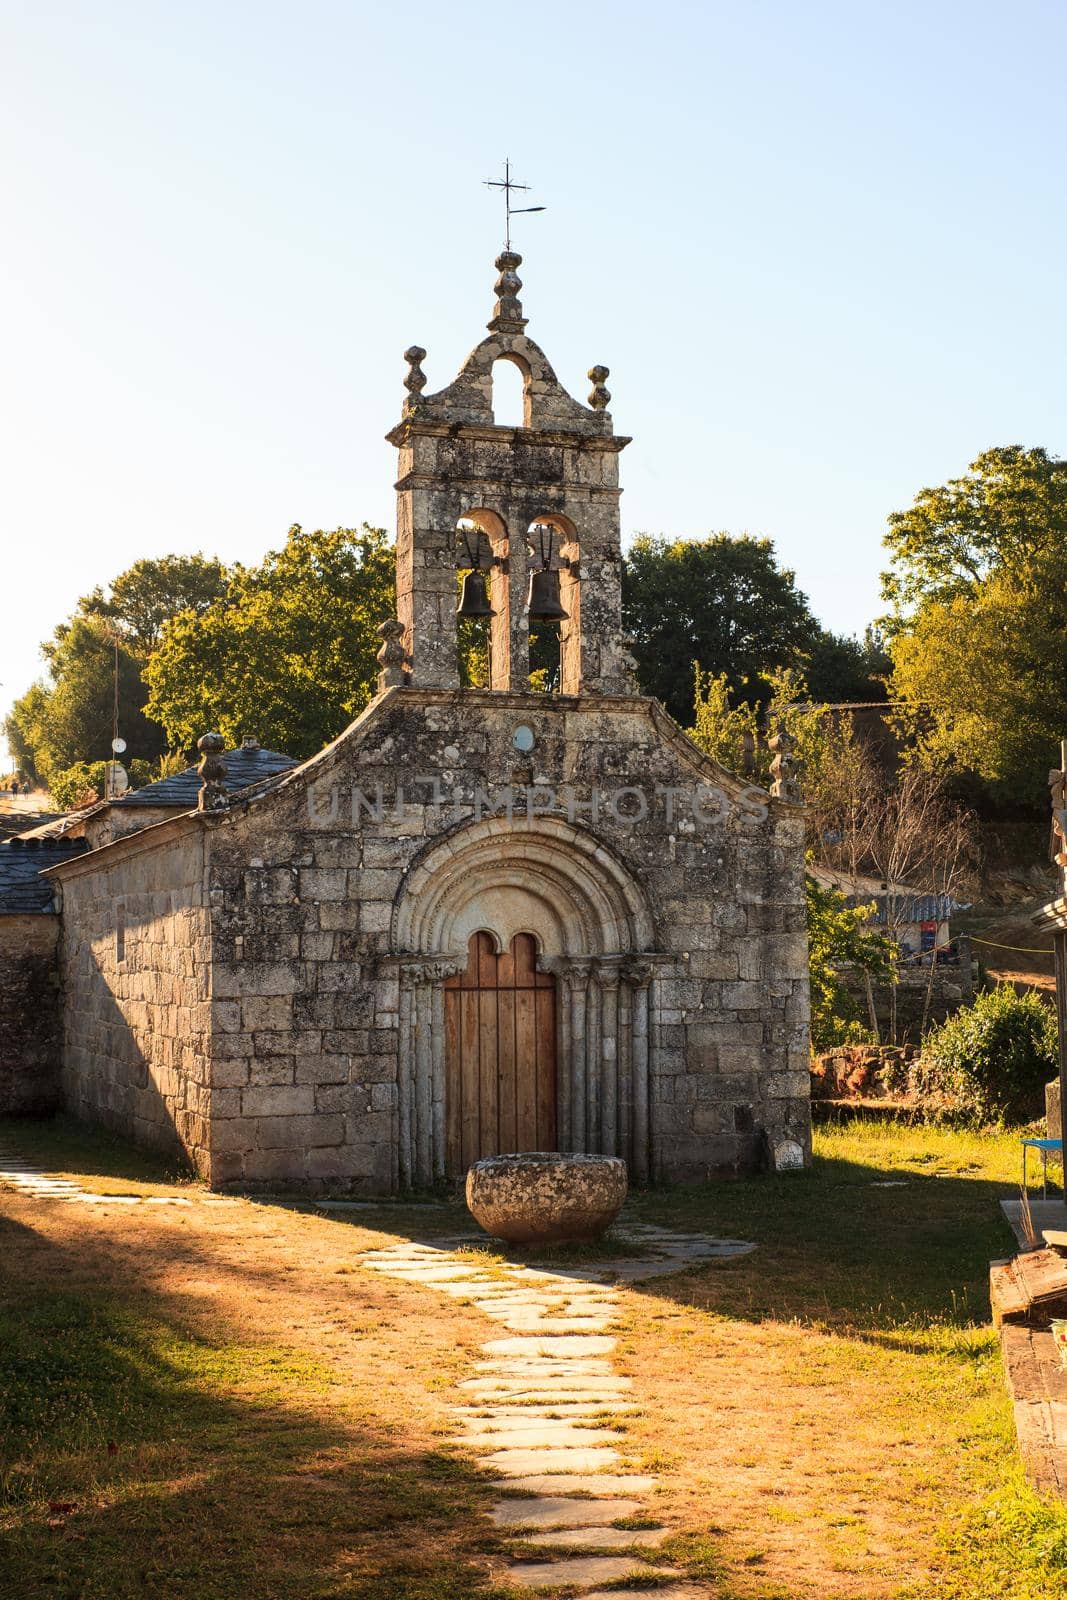 Little church, Spain by bepsimage